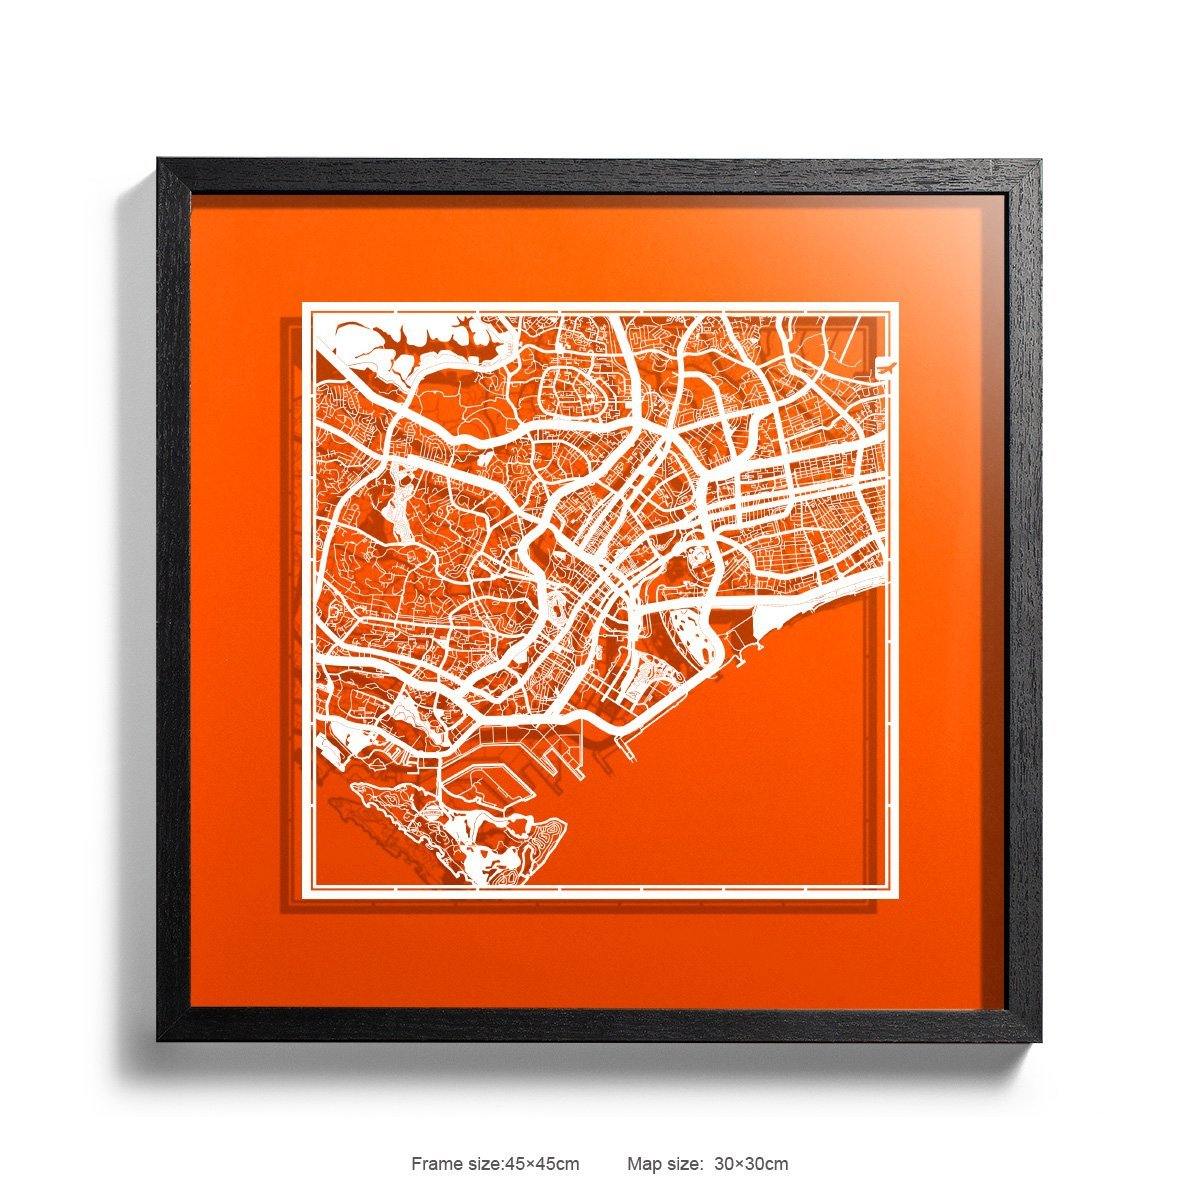 Paper cut maps framed, Tokyo / Sydney / Singapore 18 in